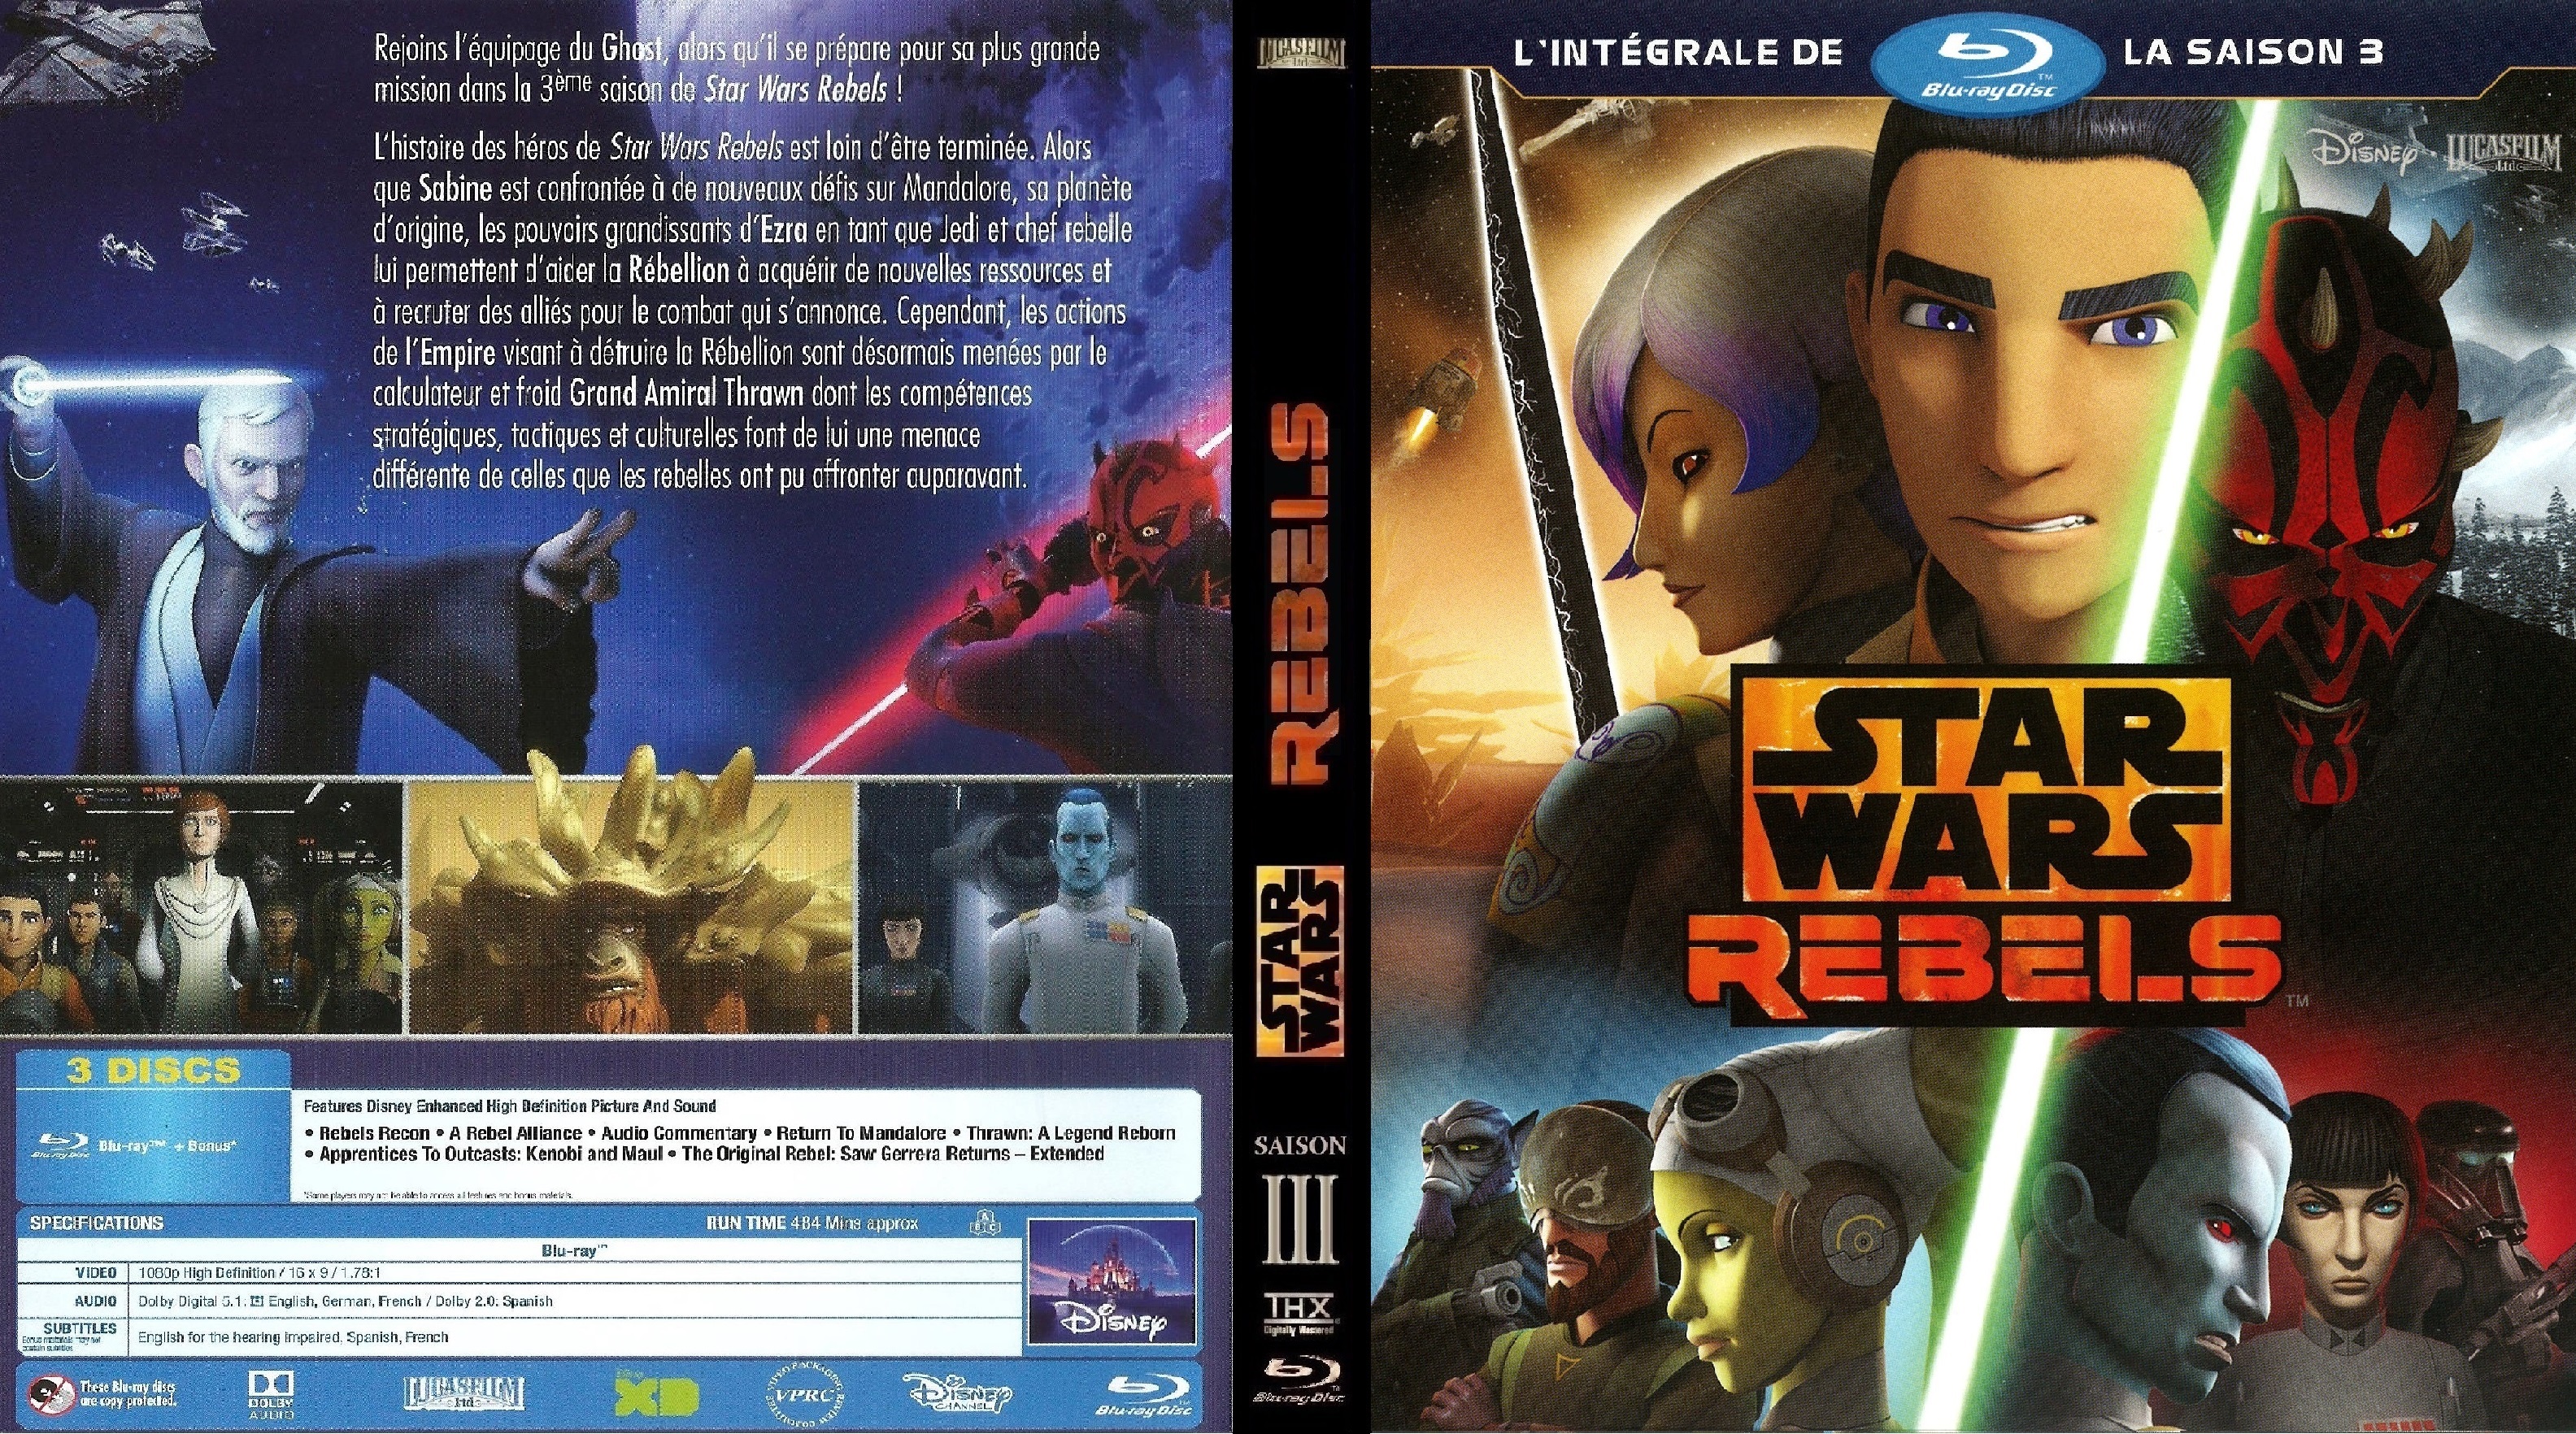 Jaquette DVD Star Wars Rebels saison 3 custom (BLU-RAY) v2